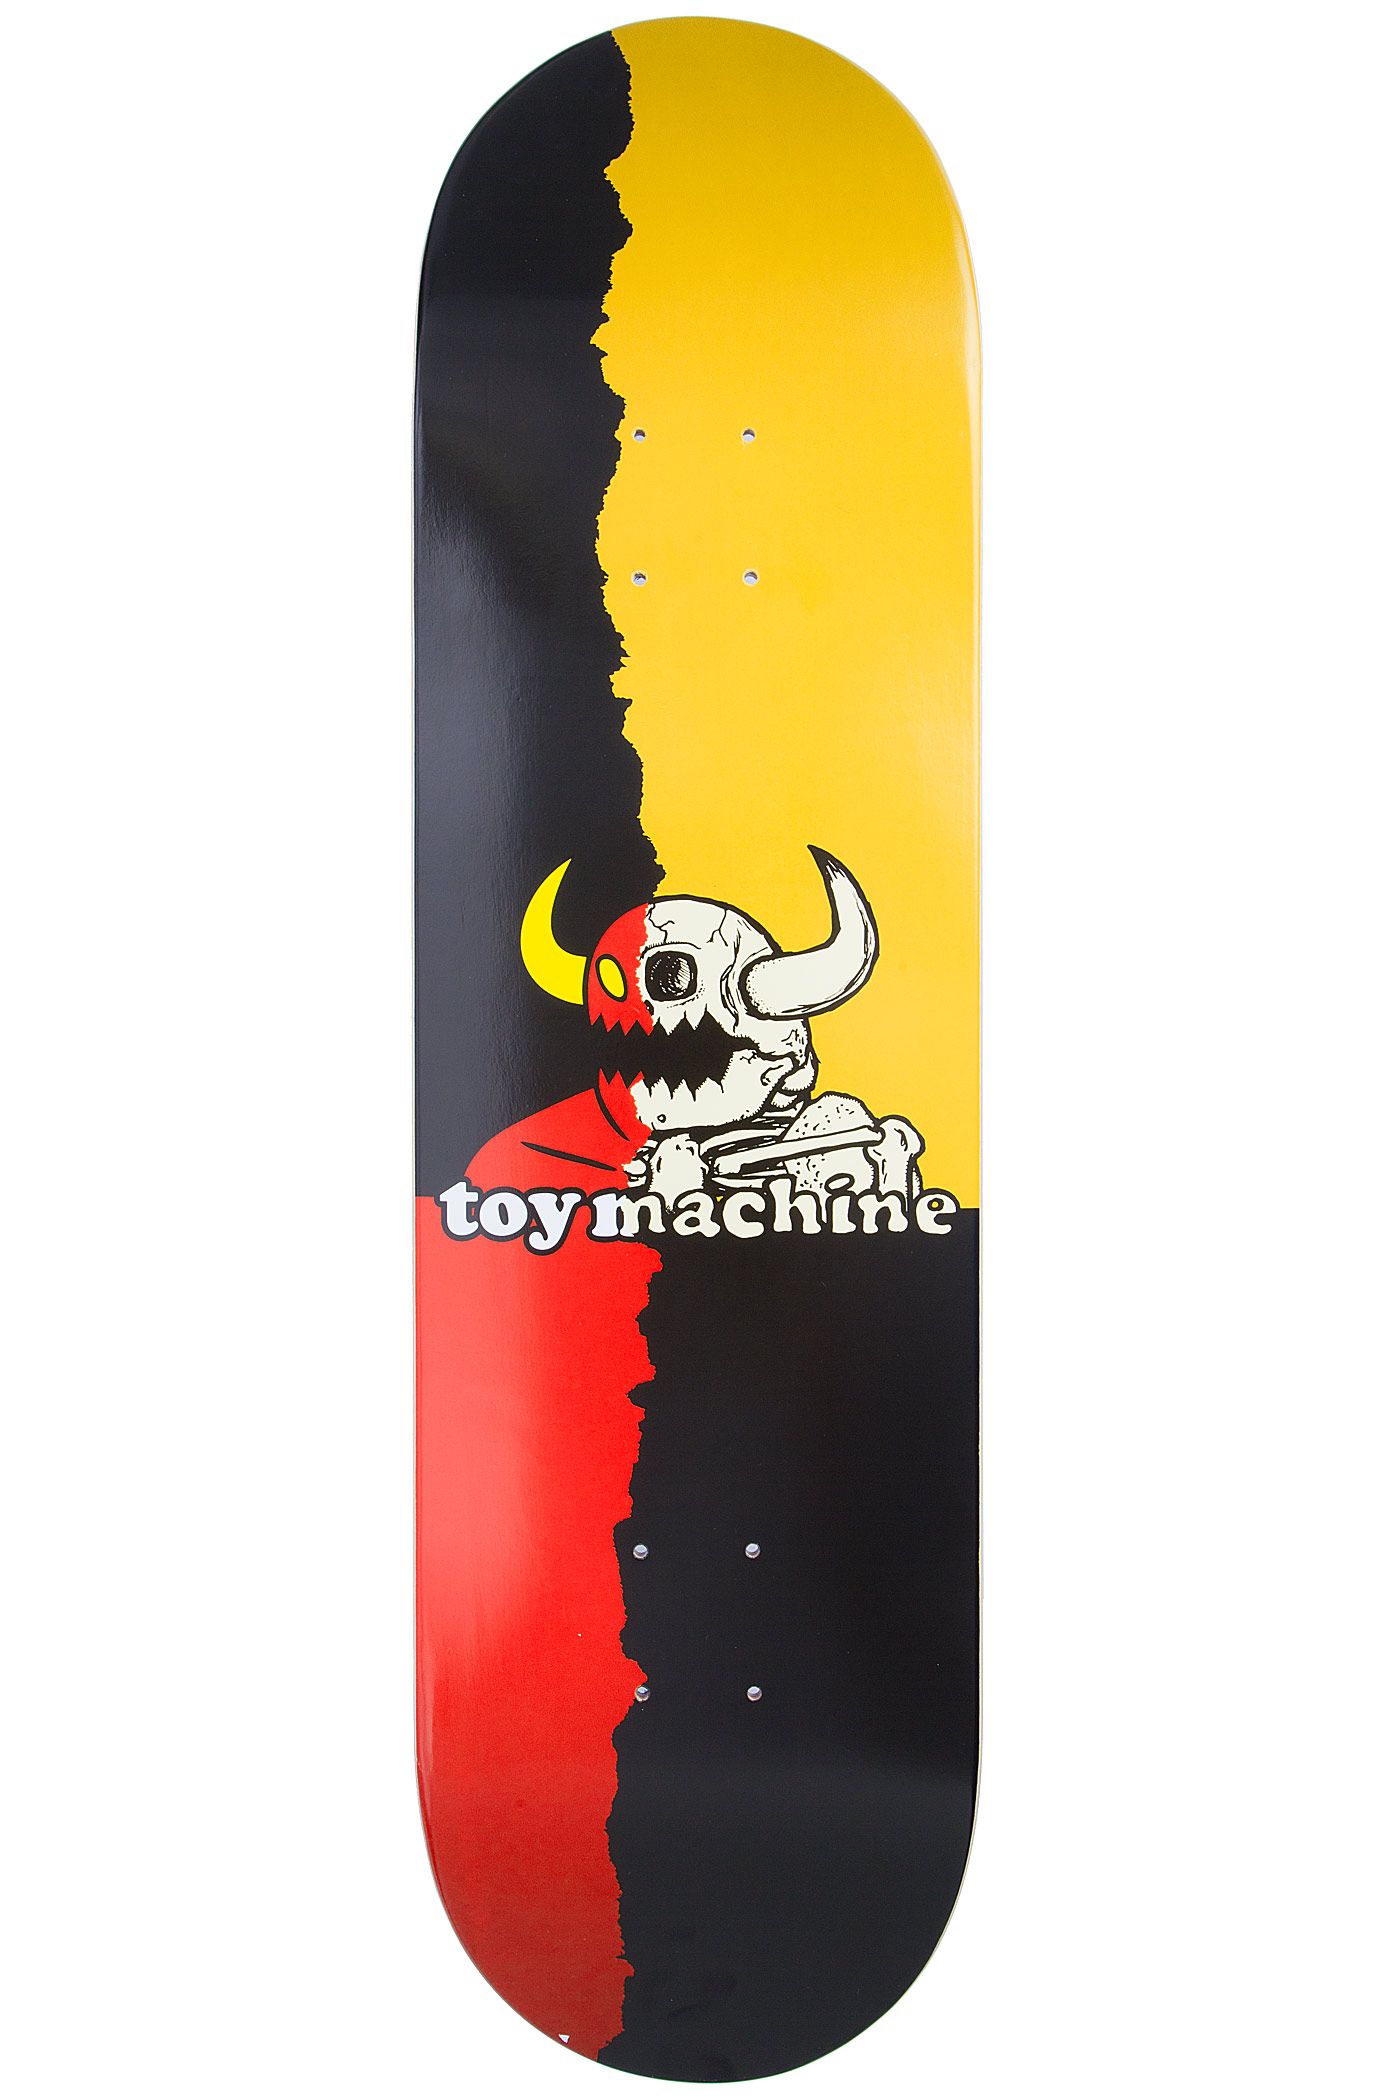 toy machine iphone wallpaper